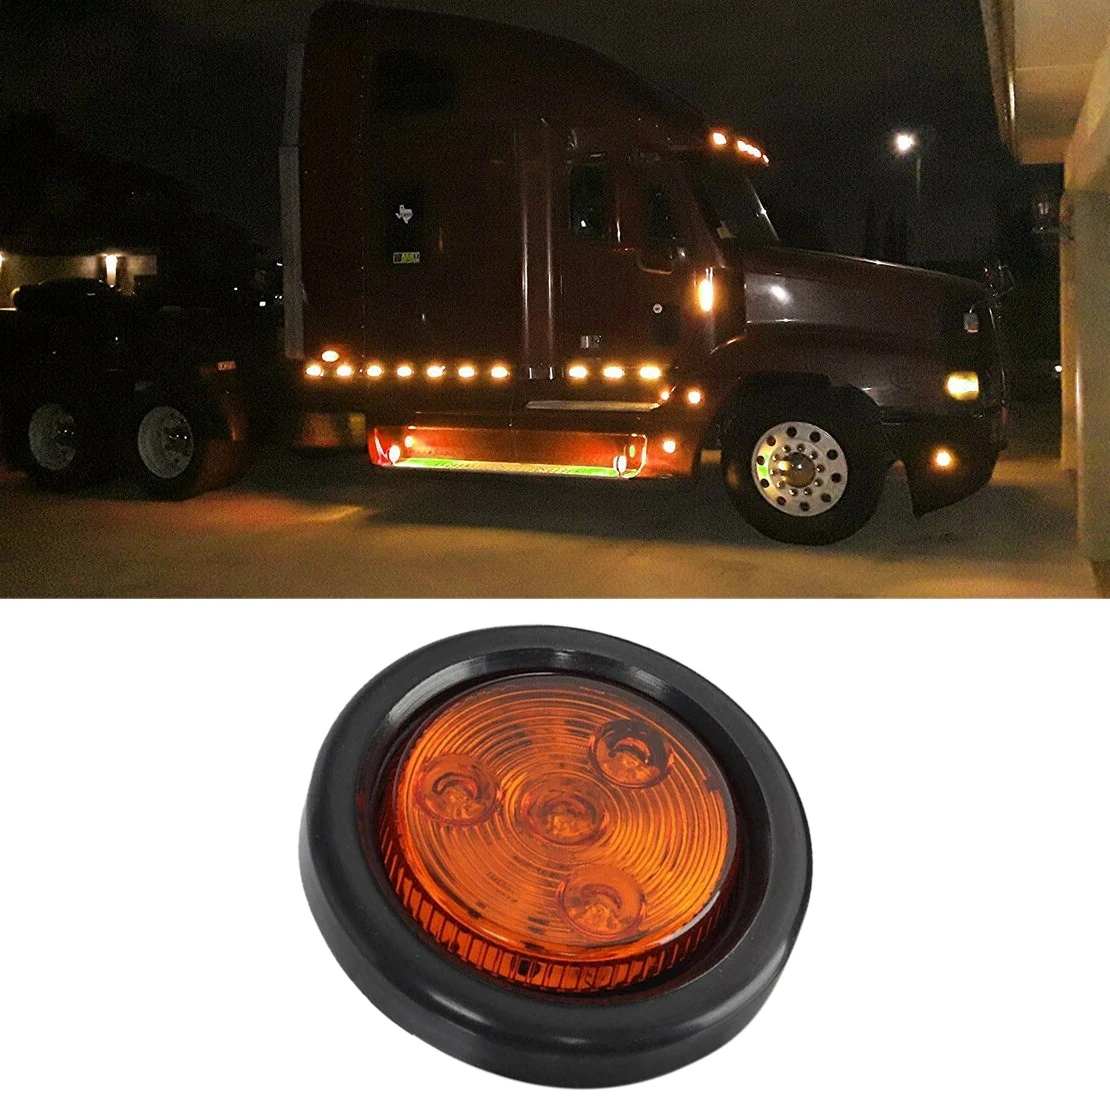 

Universal 2" 4 LED Round Amber Light Truck Trailer Side Marker Lamp Clearance Grommet Kit Fit for All 12-24V Vehicle